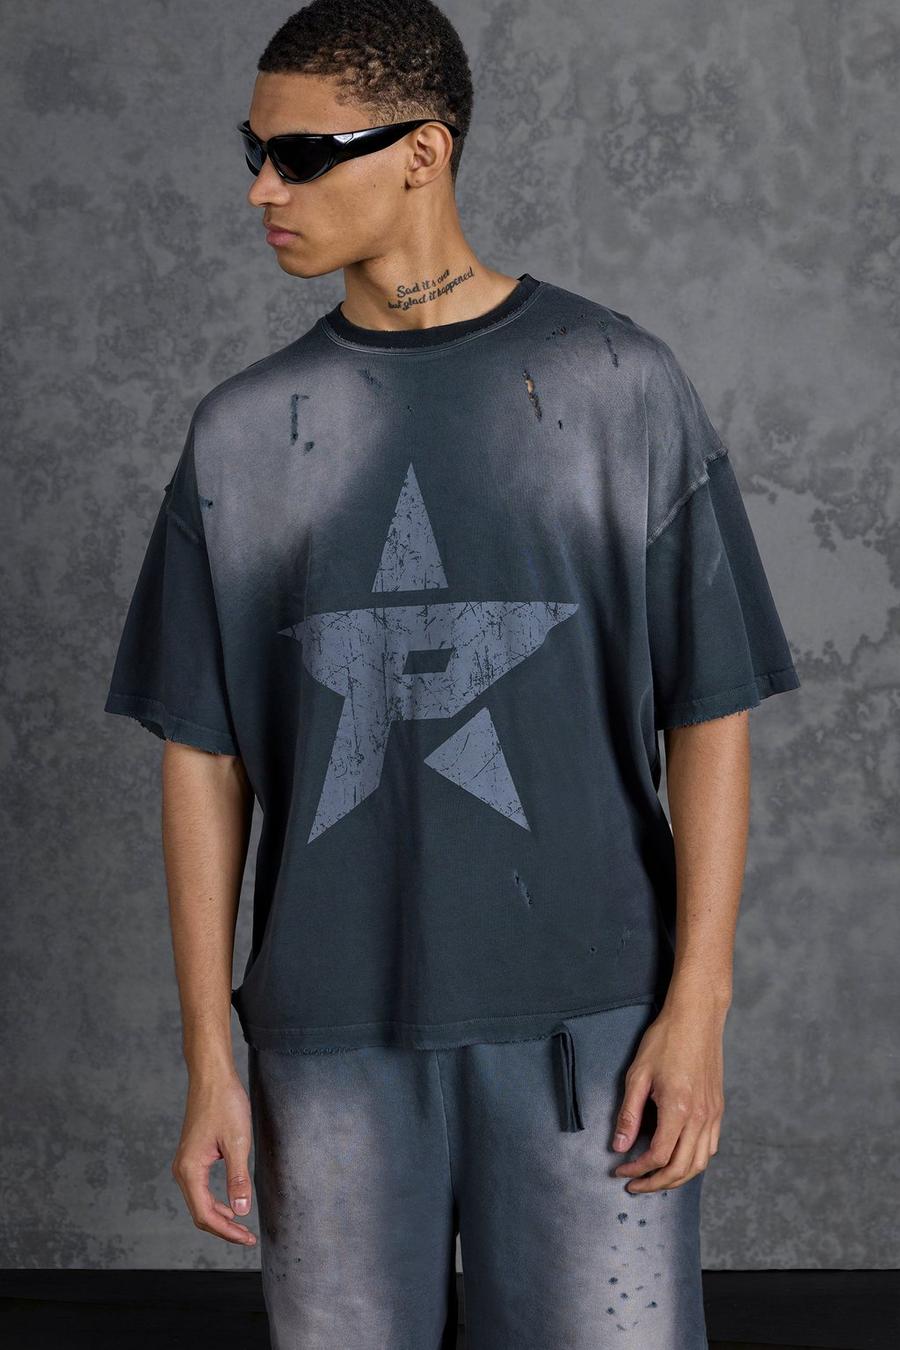 Gunna - T-shirt oversize court imprimé étoile, Grey